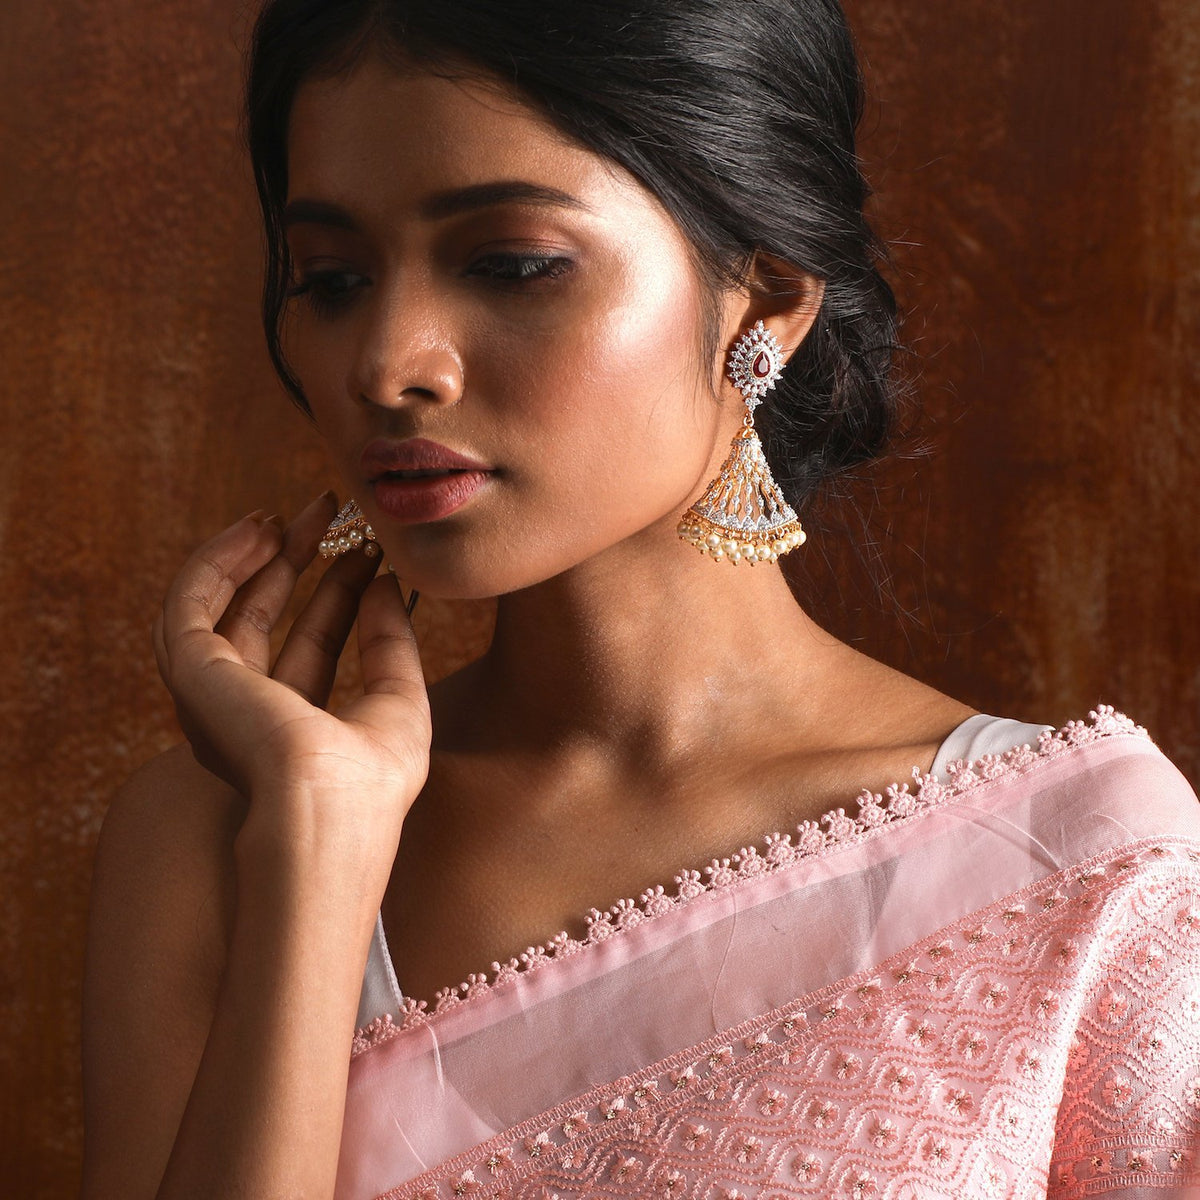 Tara Nakshatra CZ Earrings